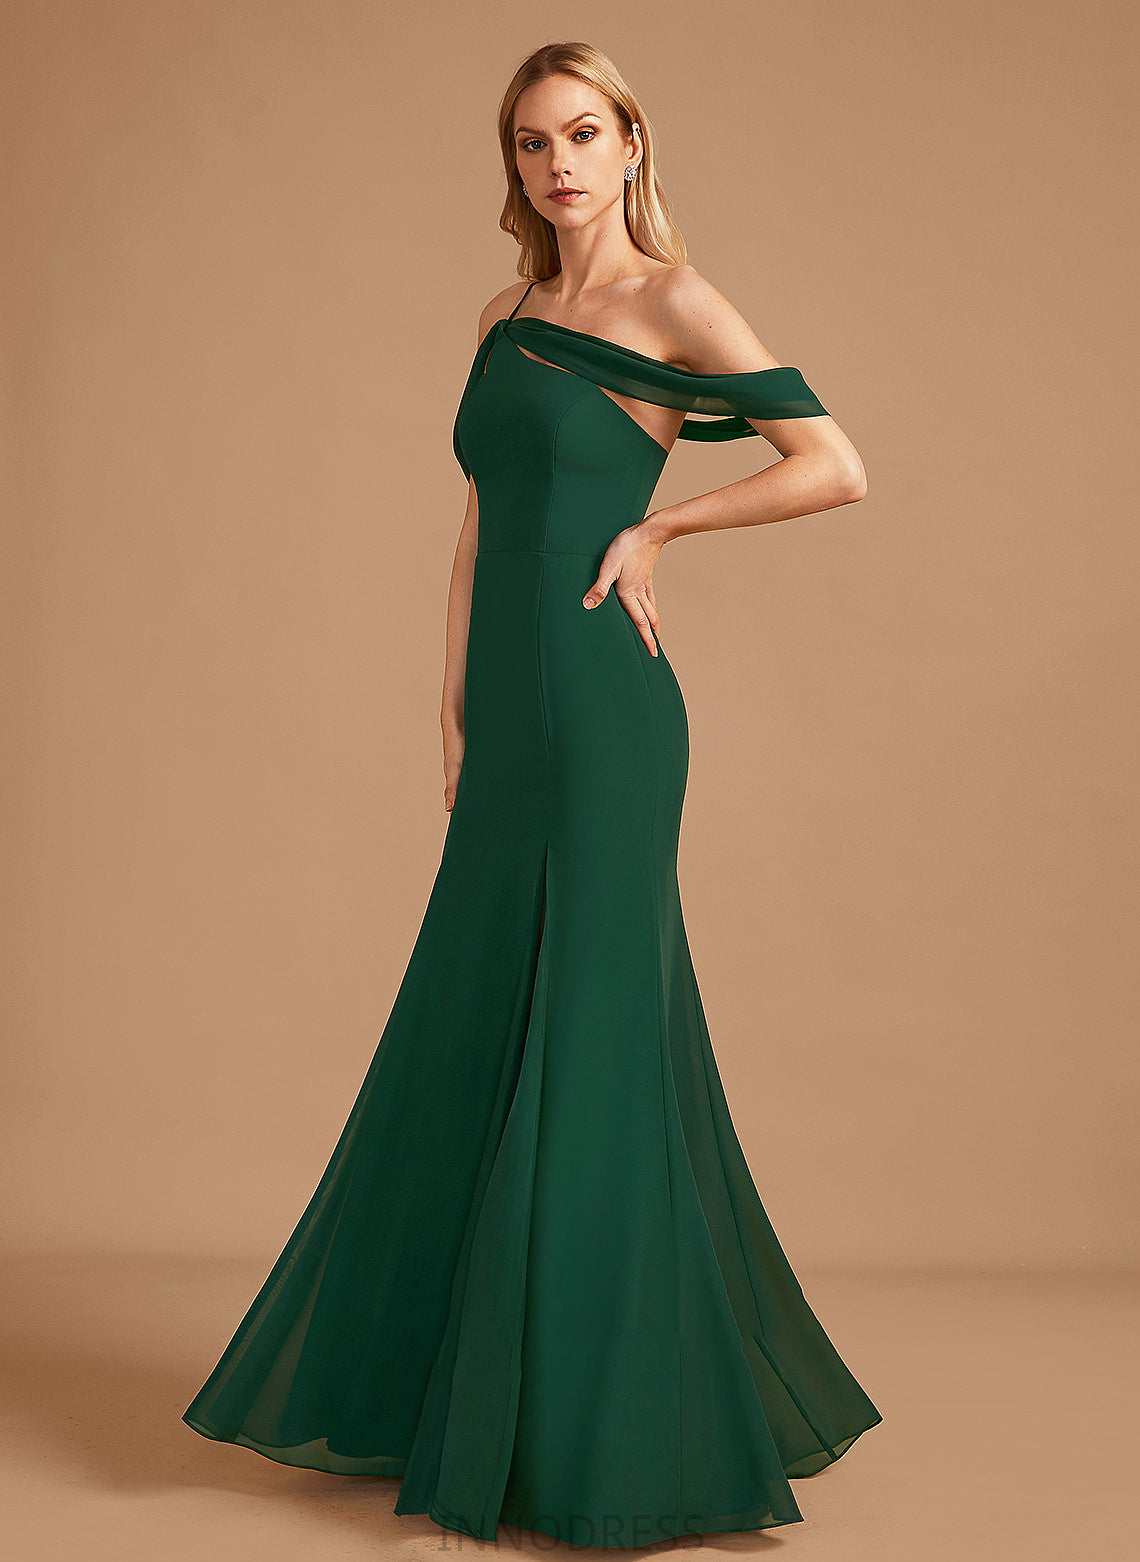 Embellishment Neckline Floor-Length One-Shoulder Length Trumpet/Mermaid Silhouette SplitFront Fabric Emma A-Line/Princess Scoop